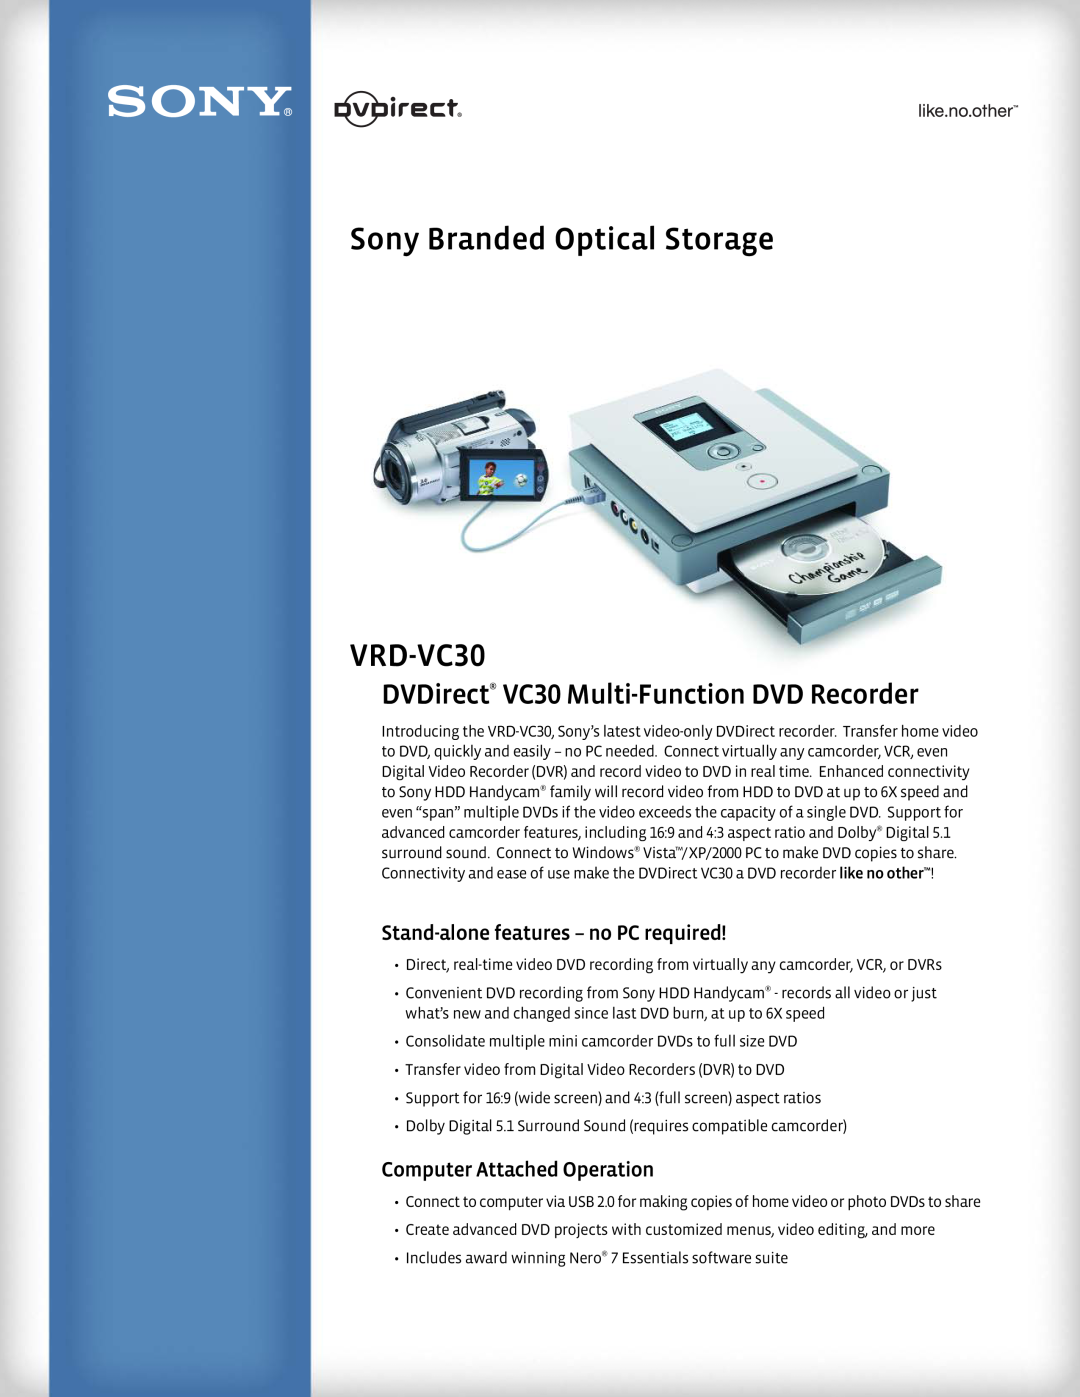 Sony manual Sony Branded Optical Storage VRD-VC30, DVDirect VC30 Multi-Function DVD Recorder 